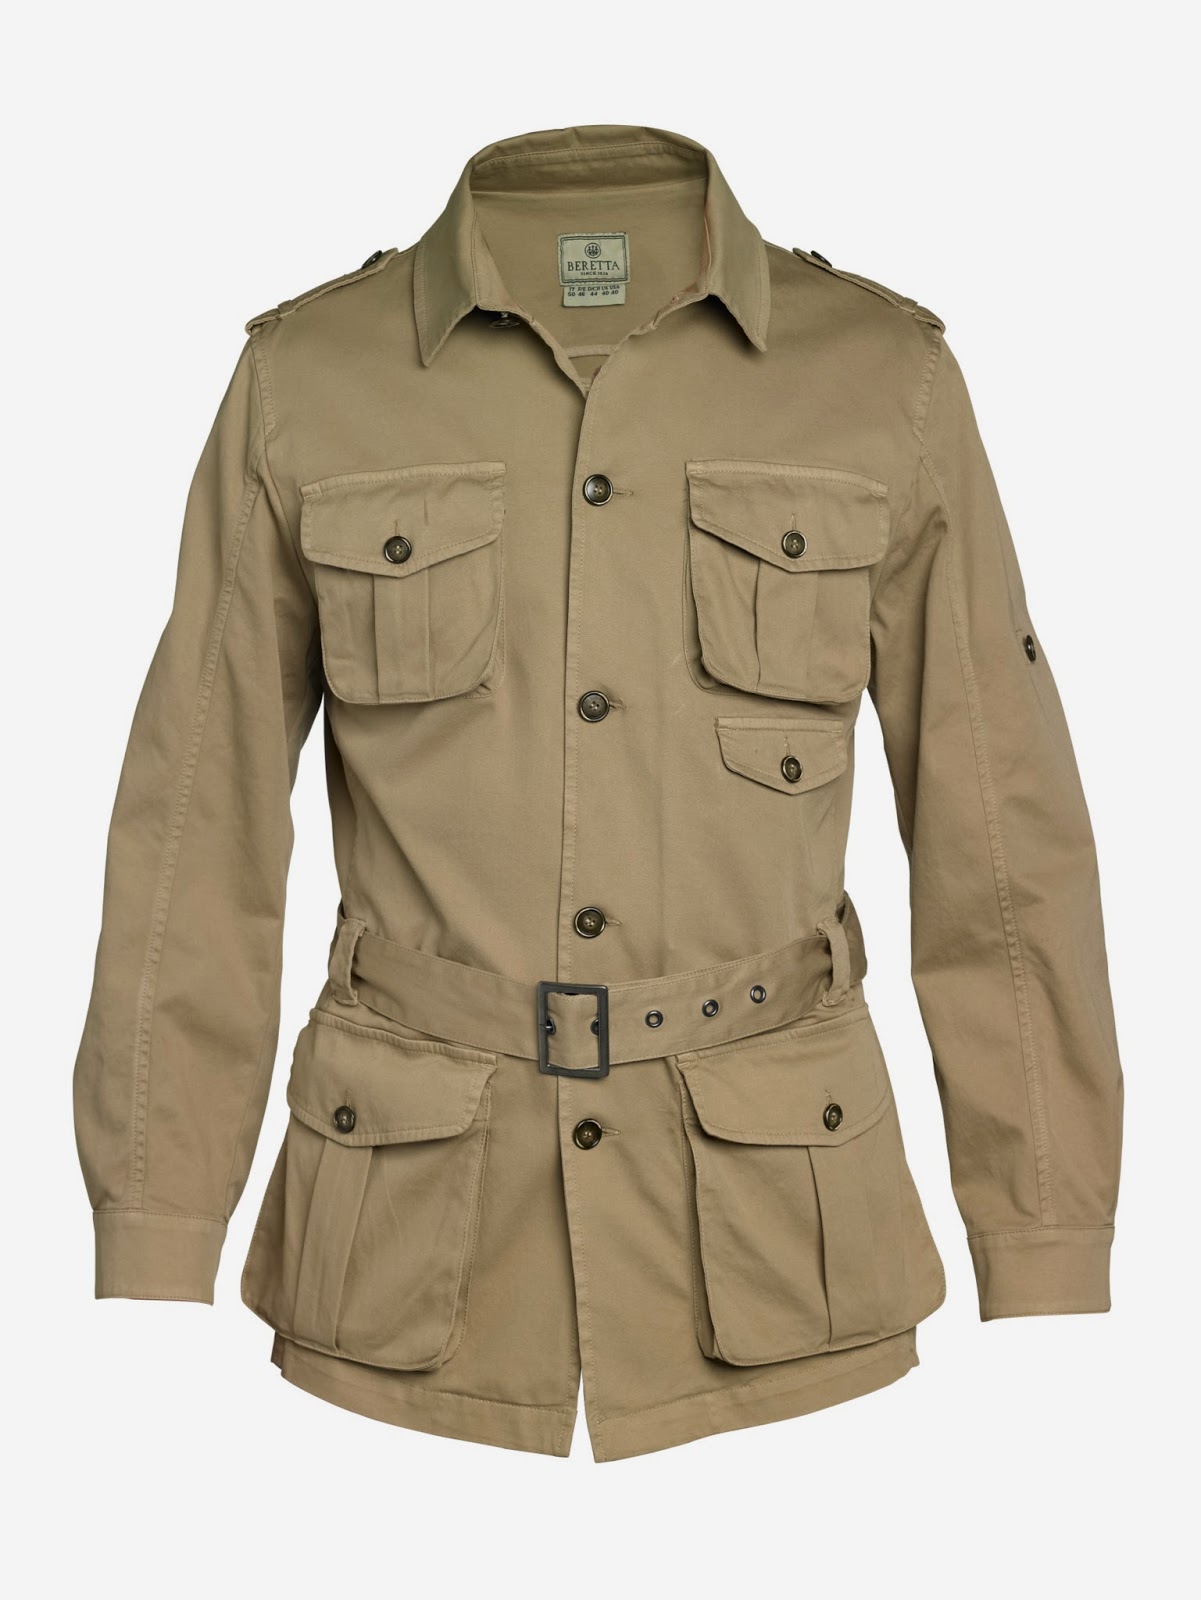 Pinterest | Safari jacket, Safari jacket outfit, Mens outfits